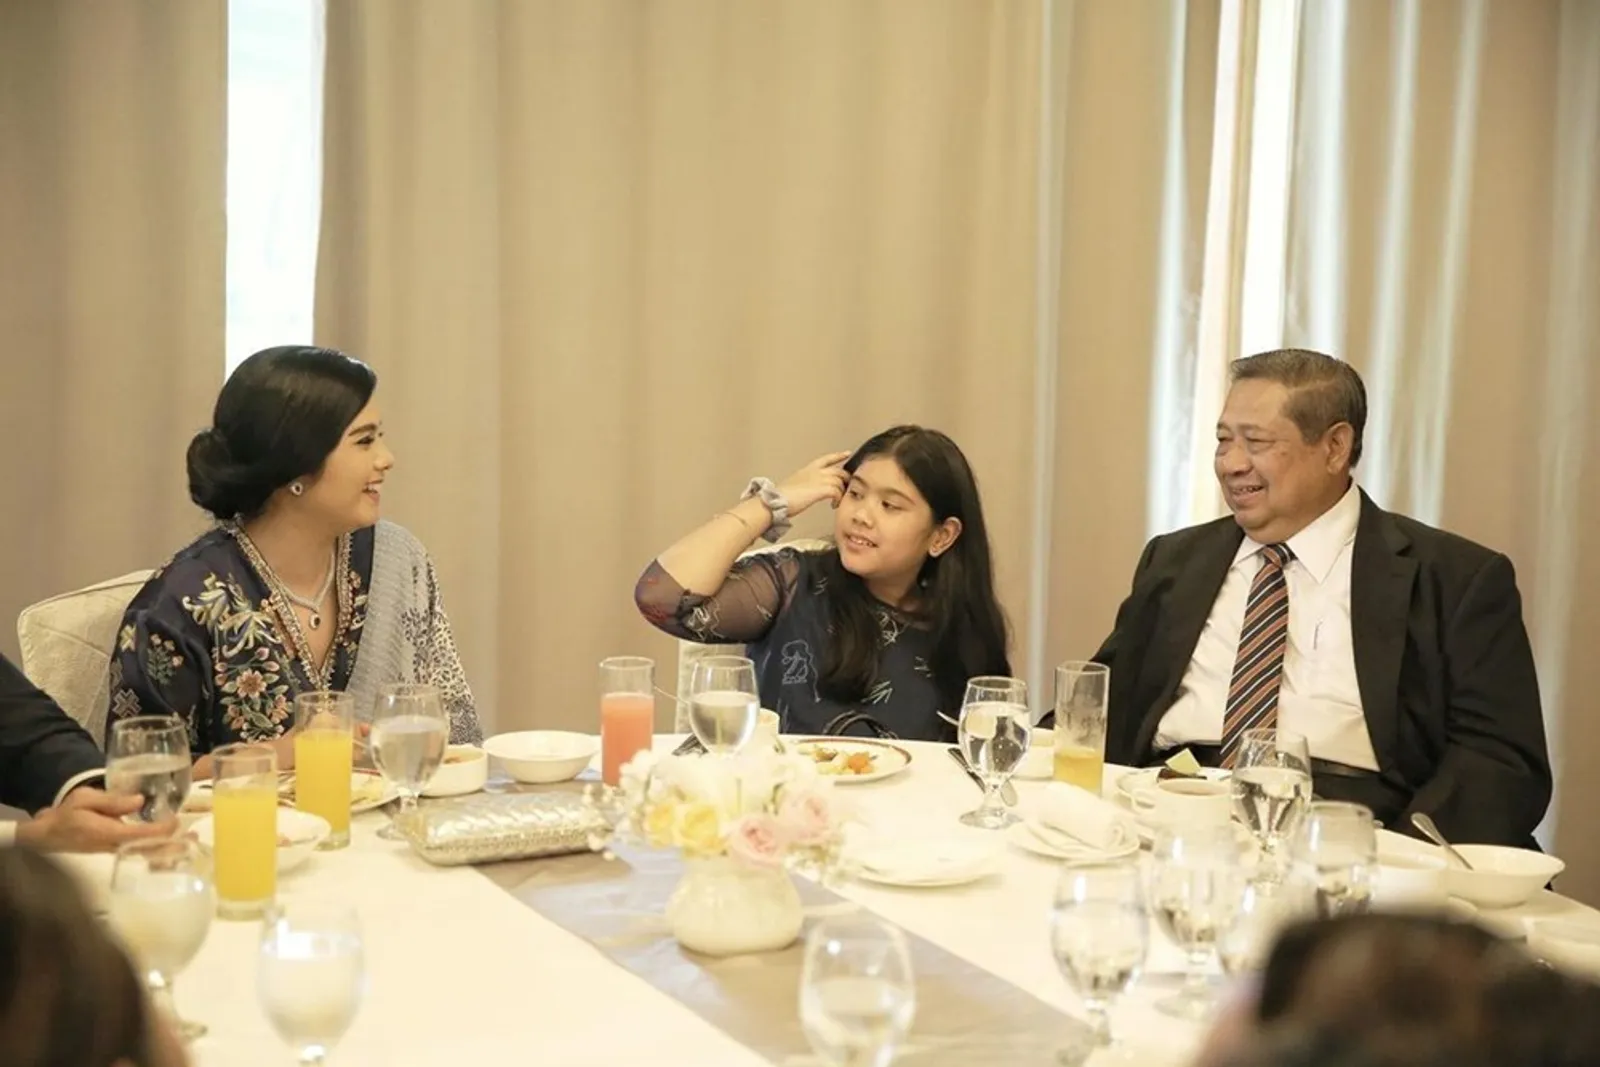 9 Bukti Hangatnya Keluarga SBY, Setia Dampingi Saat Suka dan Duka